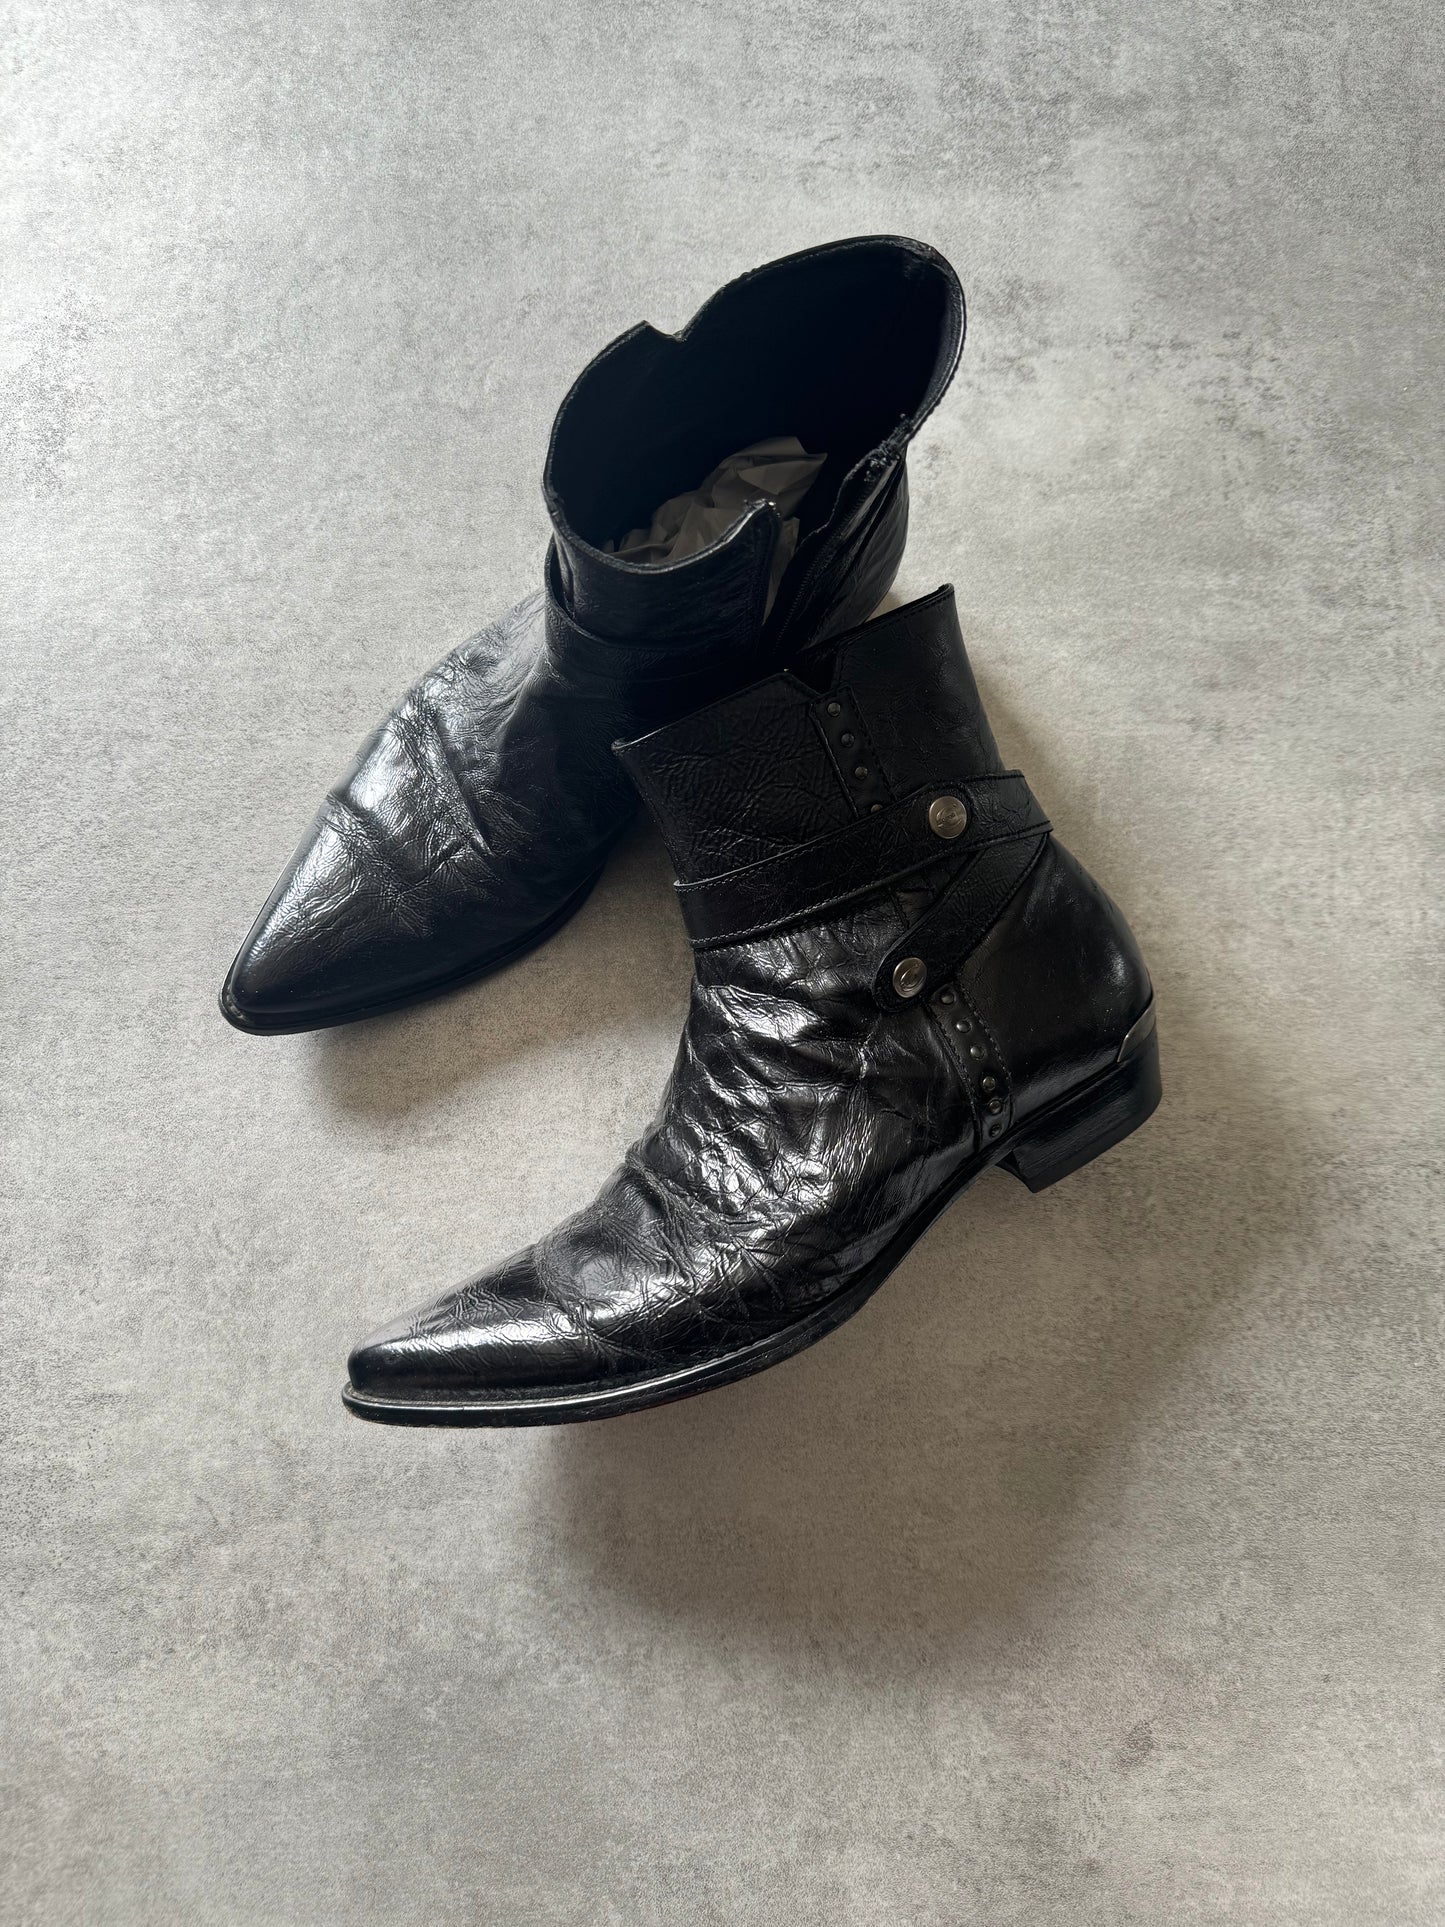 Cavalli Black Western Leather Boots  (43) - 6